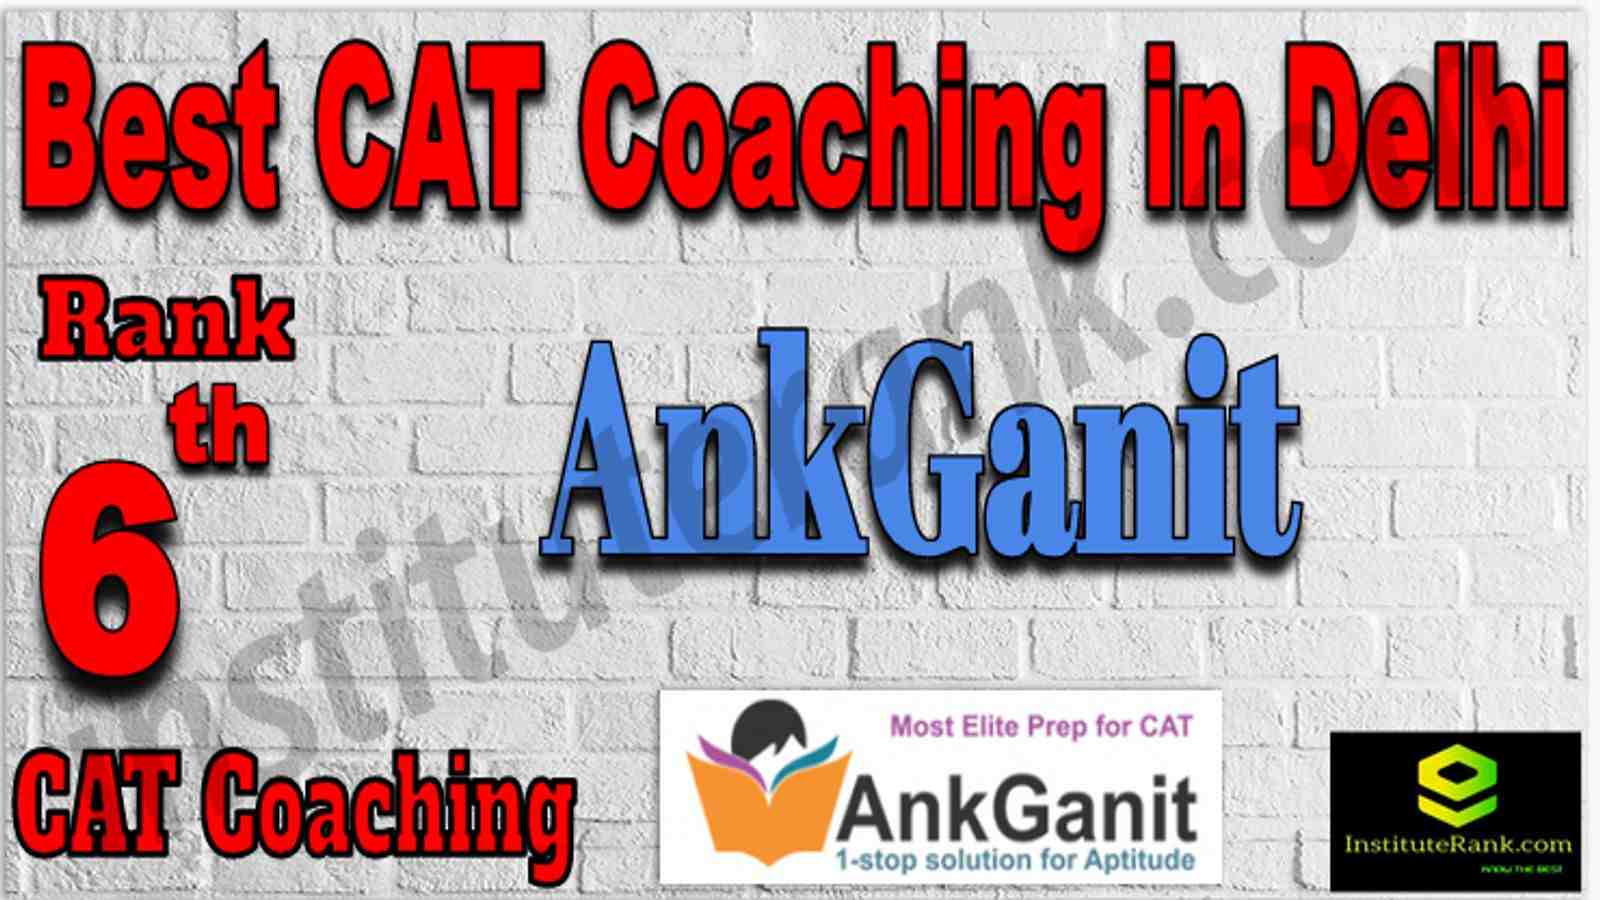 Ankganit CAT Coaching in Delhi. Rank 6 Best CAT Coaching in Delhi Ankganit. Ankganit Best CAT Coaching in Delhi. 6th Best CAT Coaching in Delhi Ankganit. Ankganit Best CAT Coaching Institute in Delhi